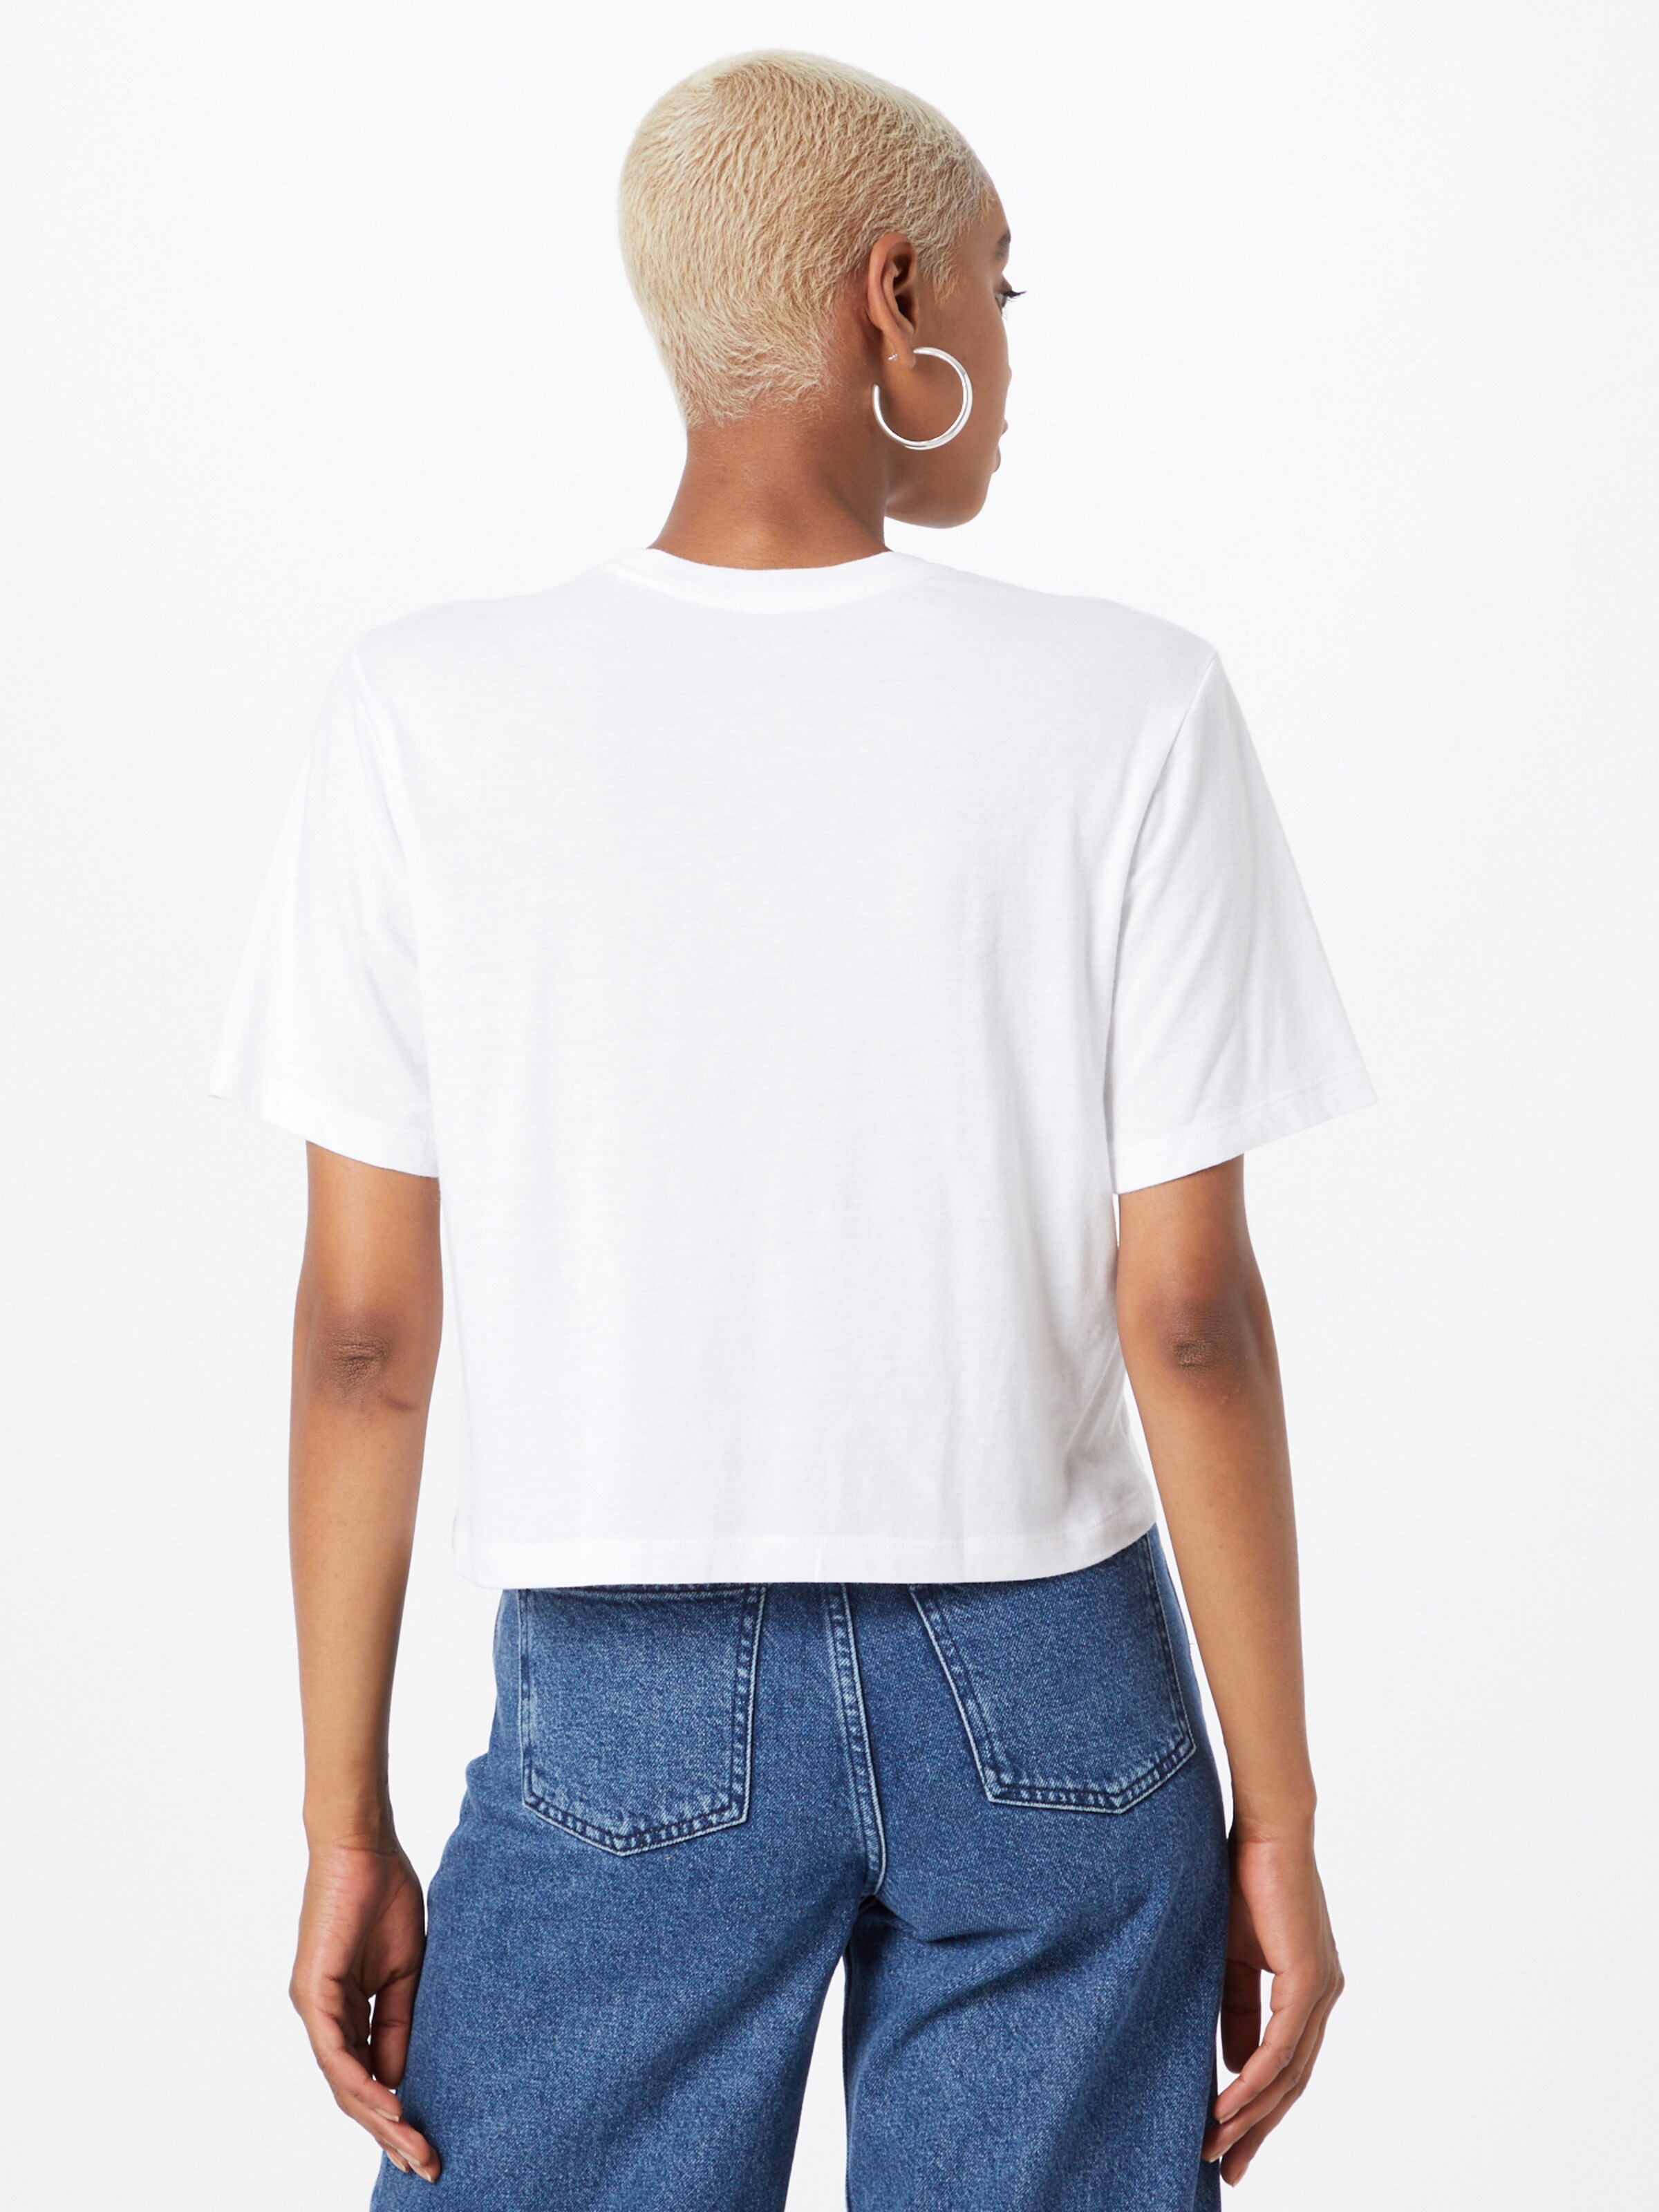 Frauen Shirts & Tops Abercrombie & Fitch Shirt in Weiß - HI61863